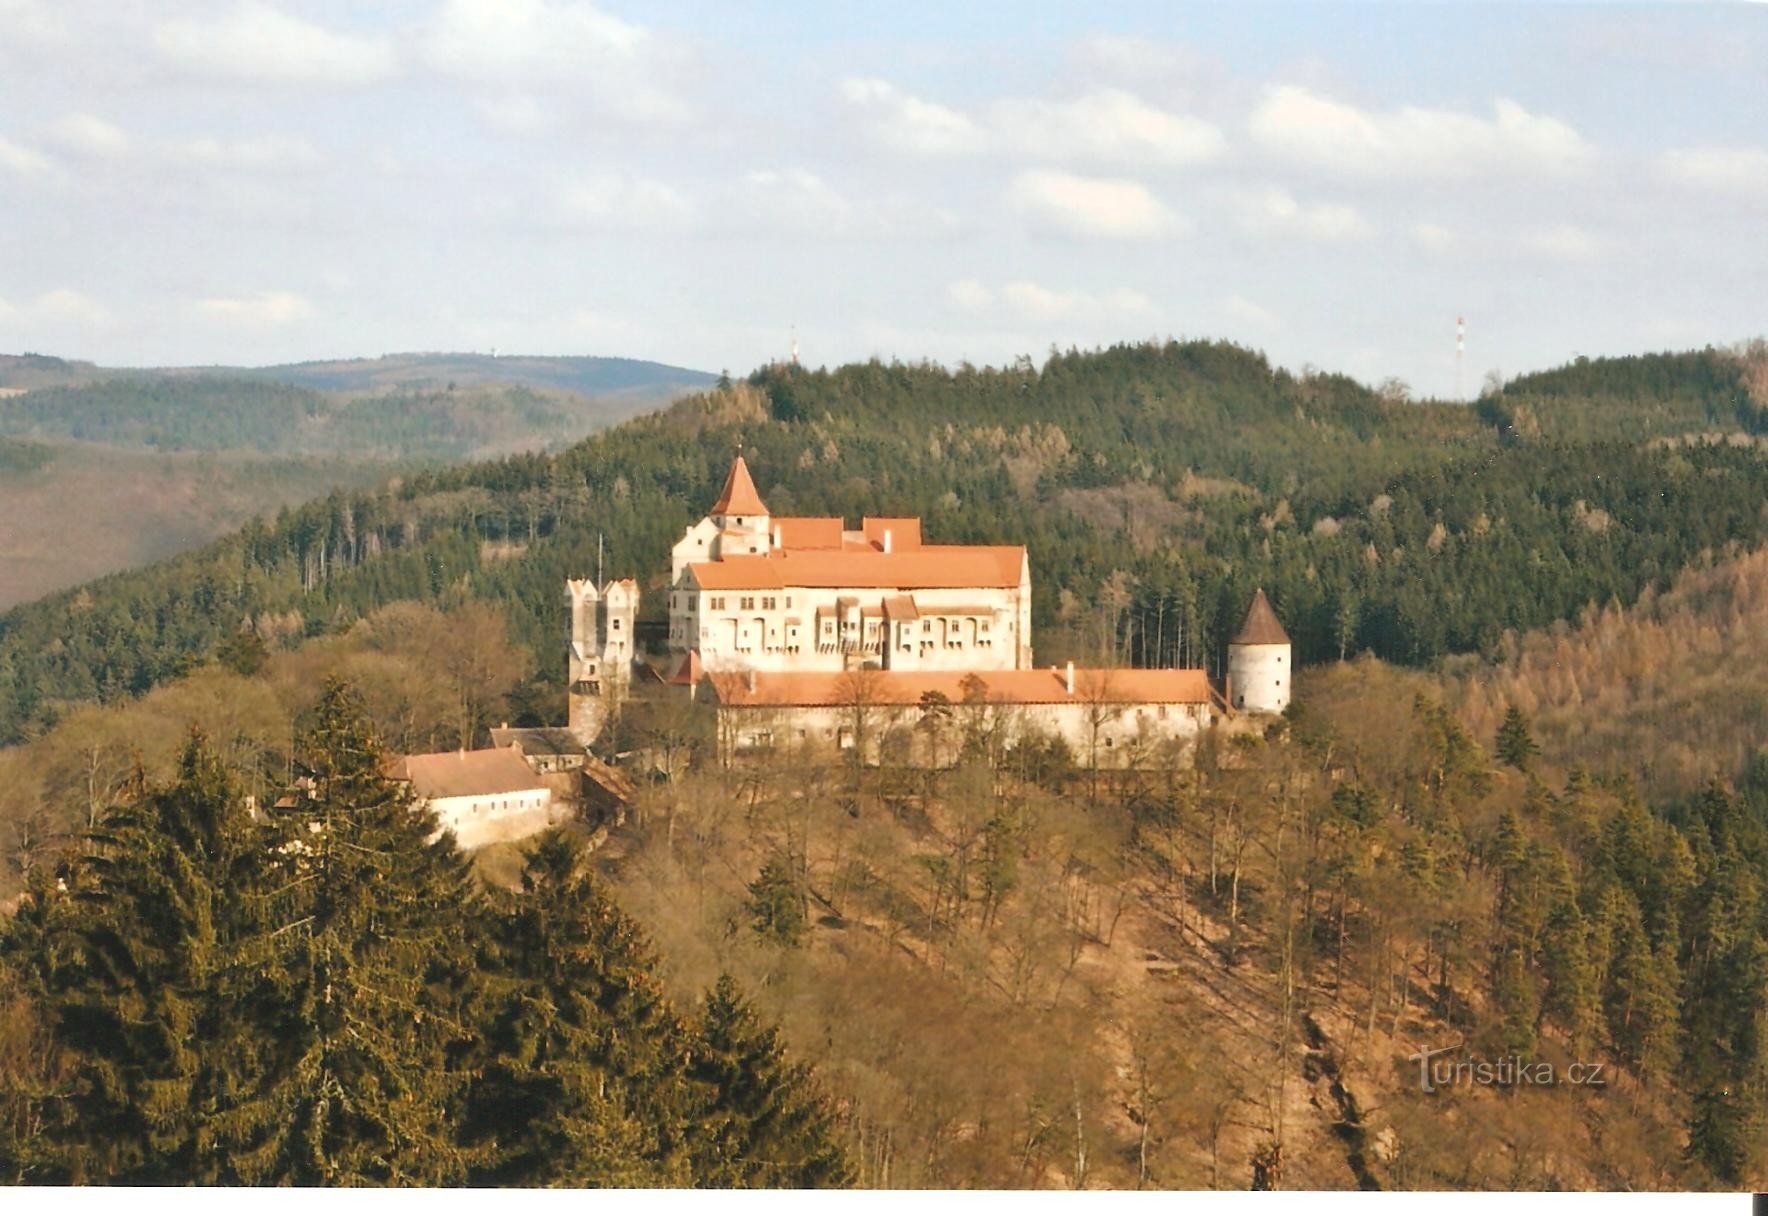 Marenčino loubí - 2008 年晩秋のペルンシュテイン城の眺め